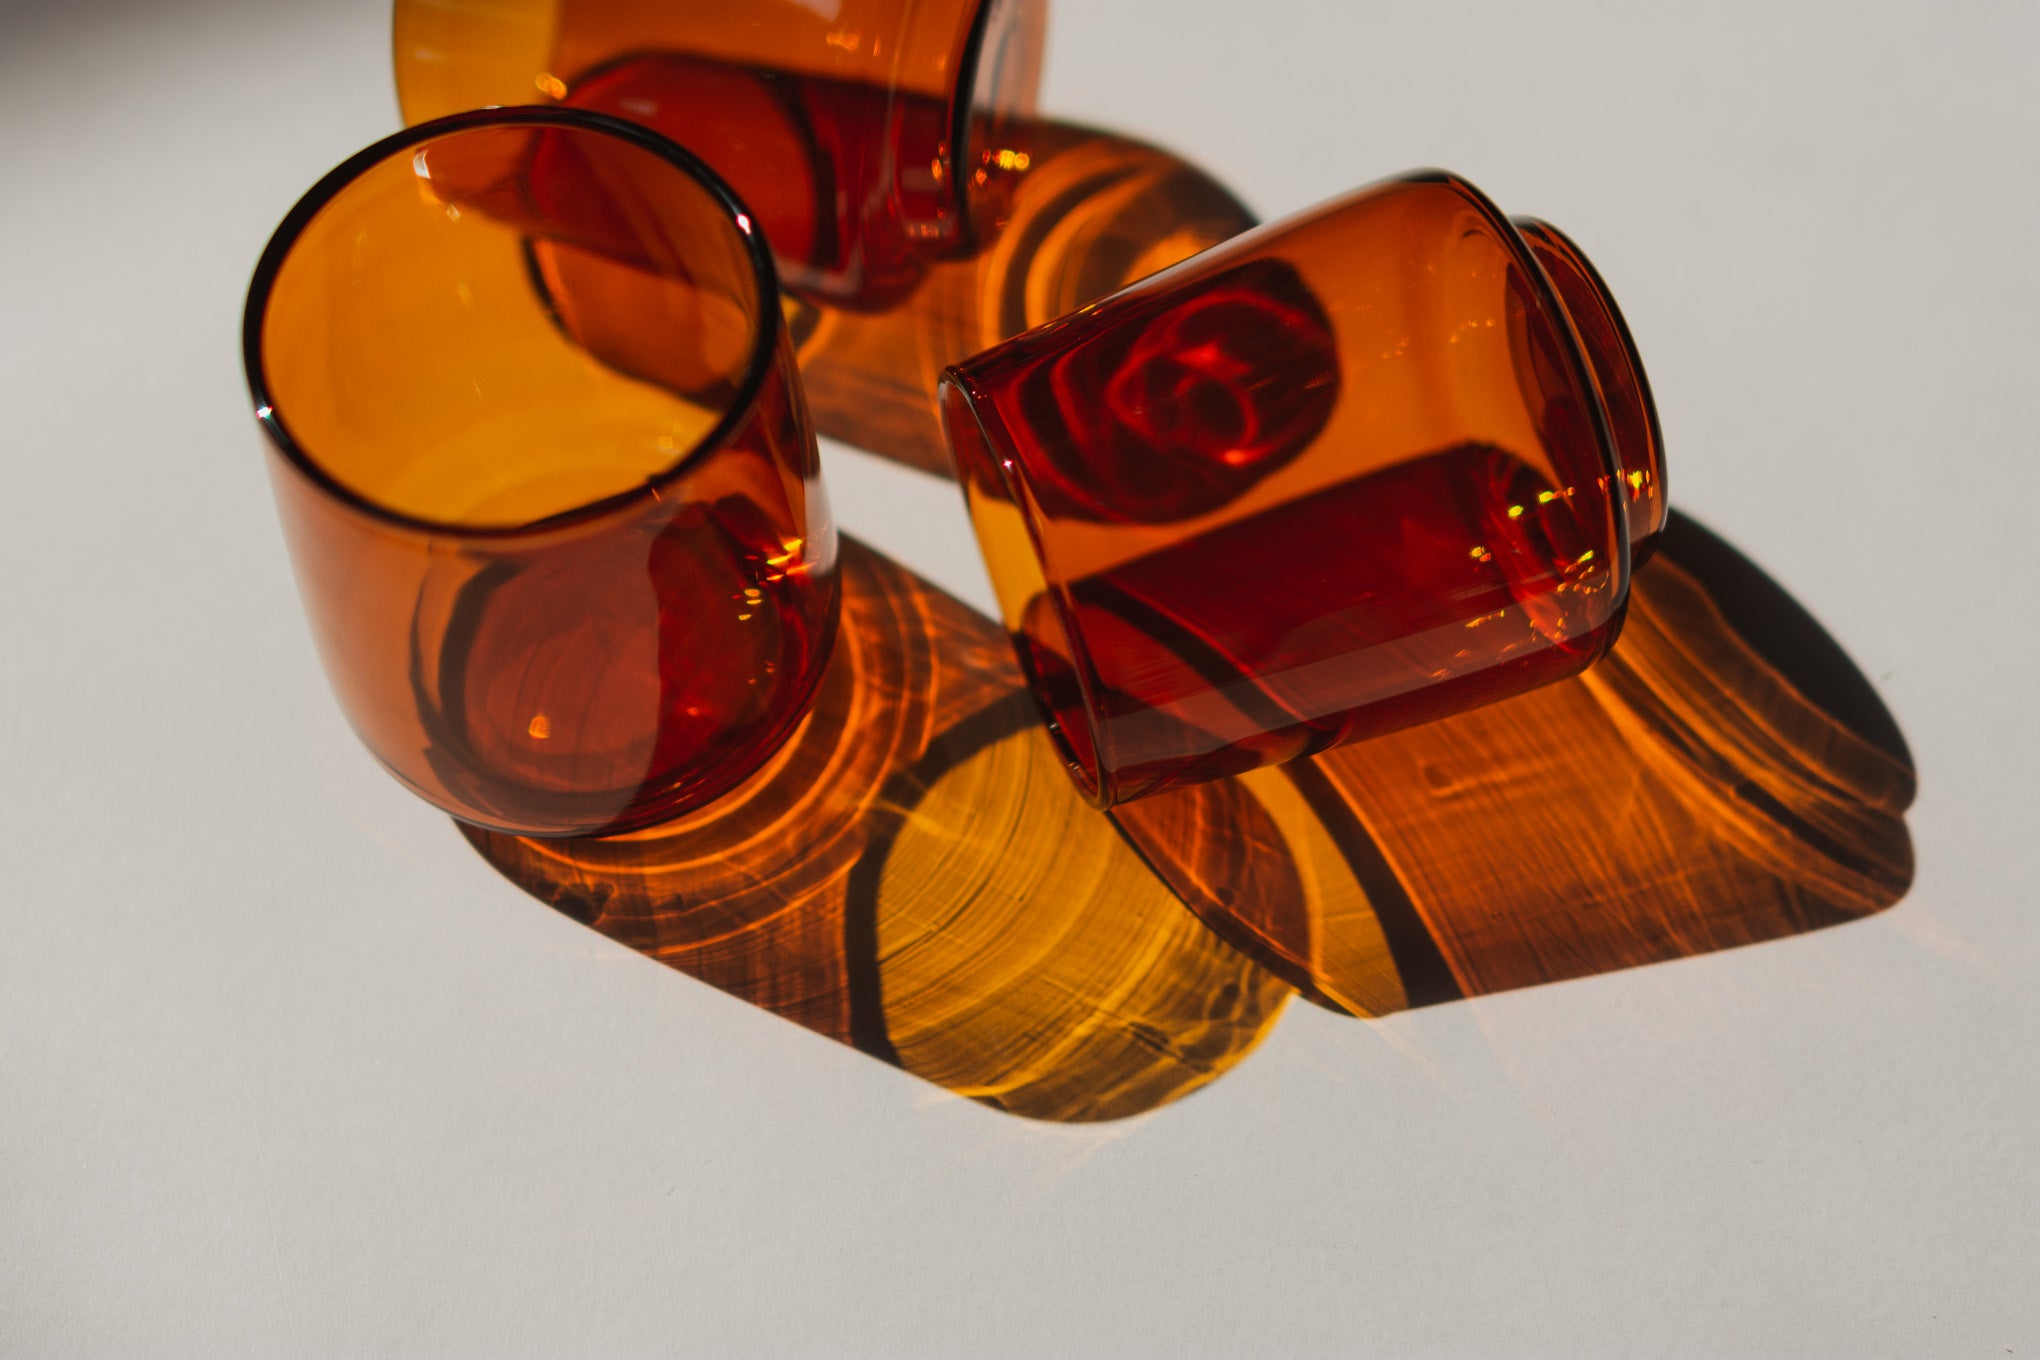 Kinto Sepia Amber Glasses & Mugs, Set of 2, 4 Sizes